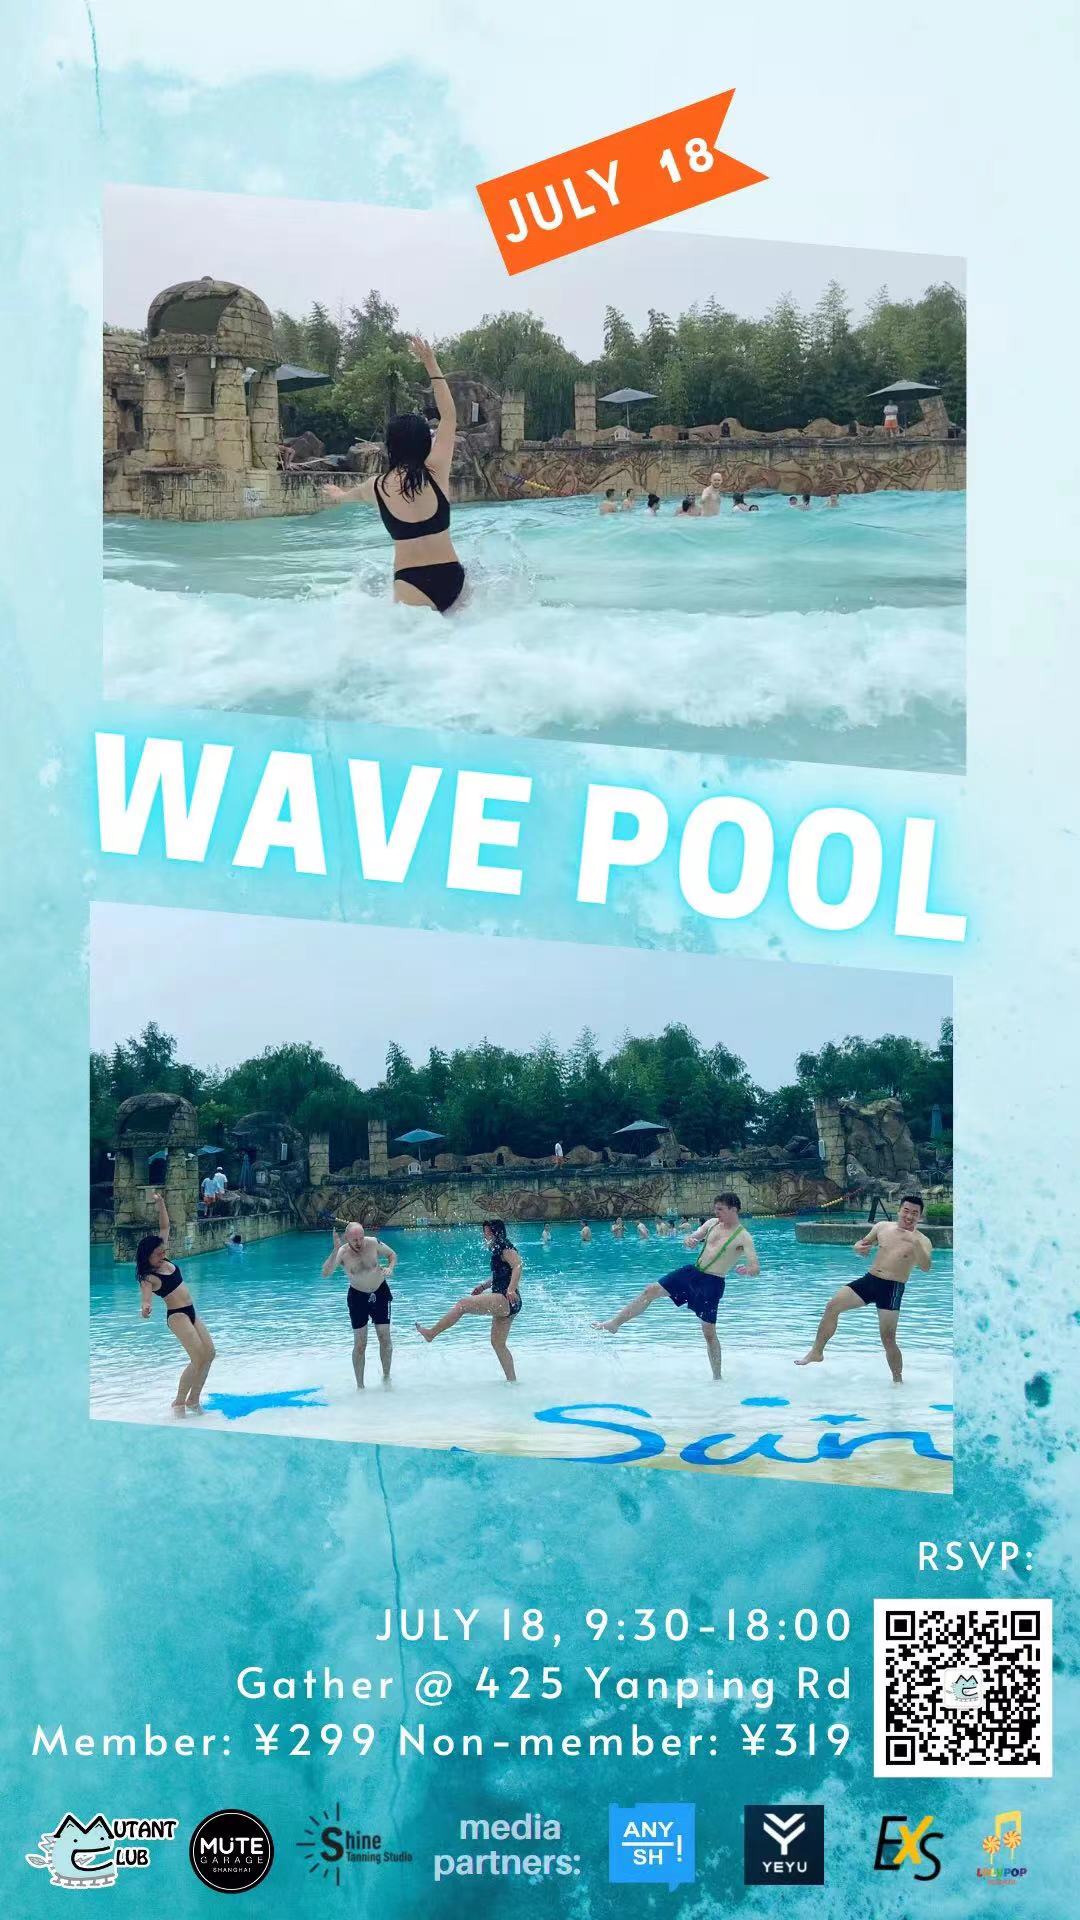 Wave pool